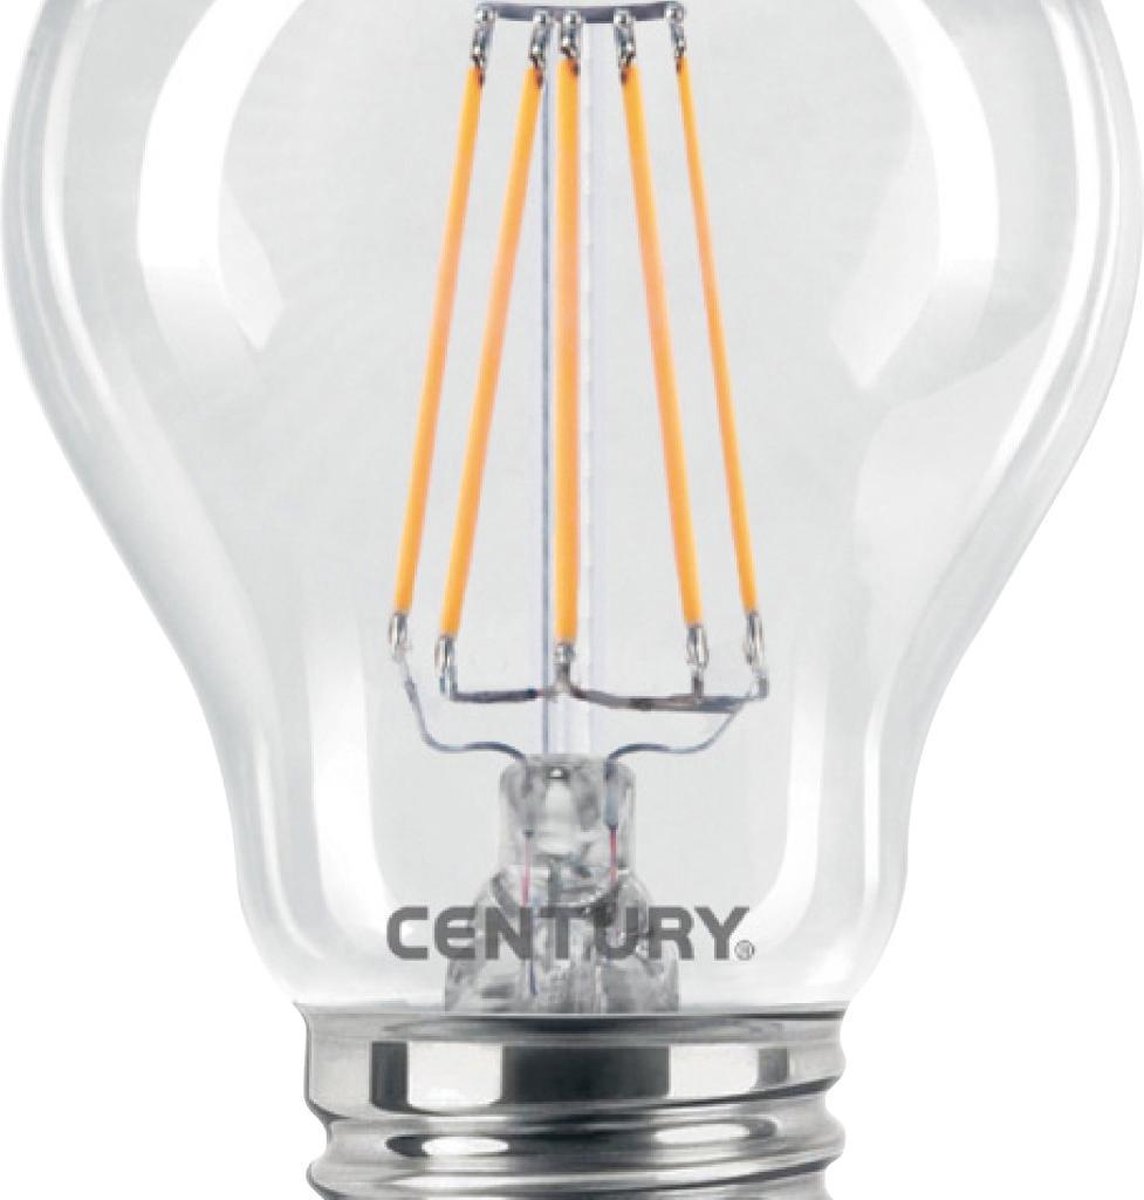 Century LED Vintage Filamentlamp E27 Bol 8 W 1055 lm 2700 K | 1 stuks - ING3P-082727